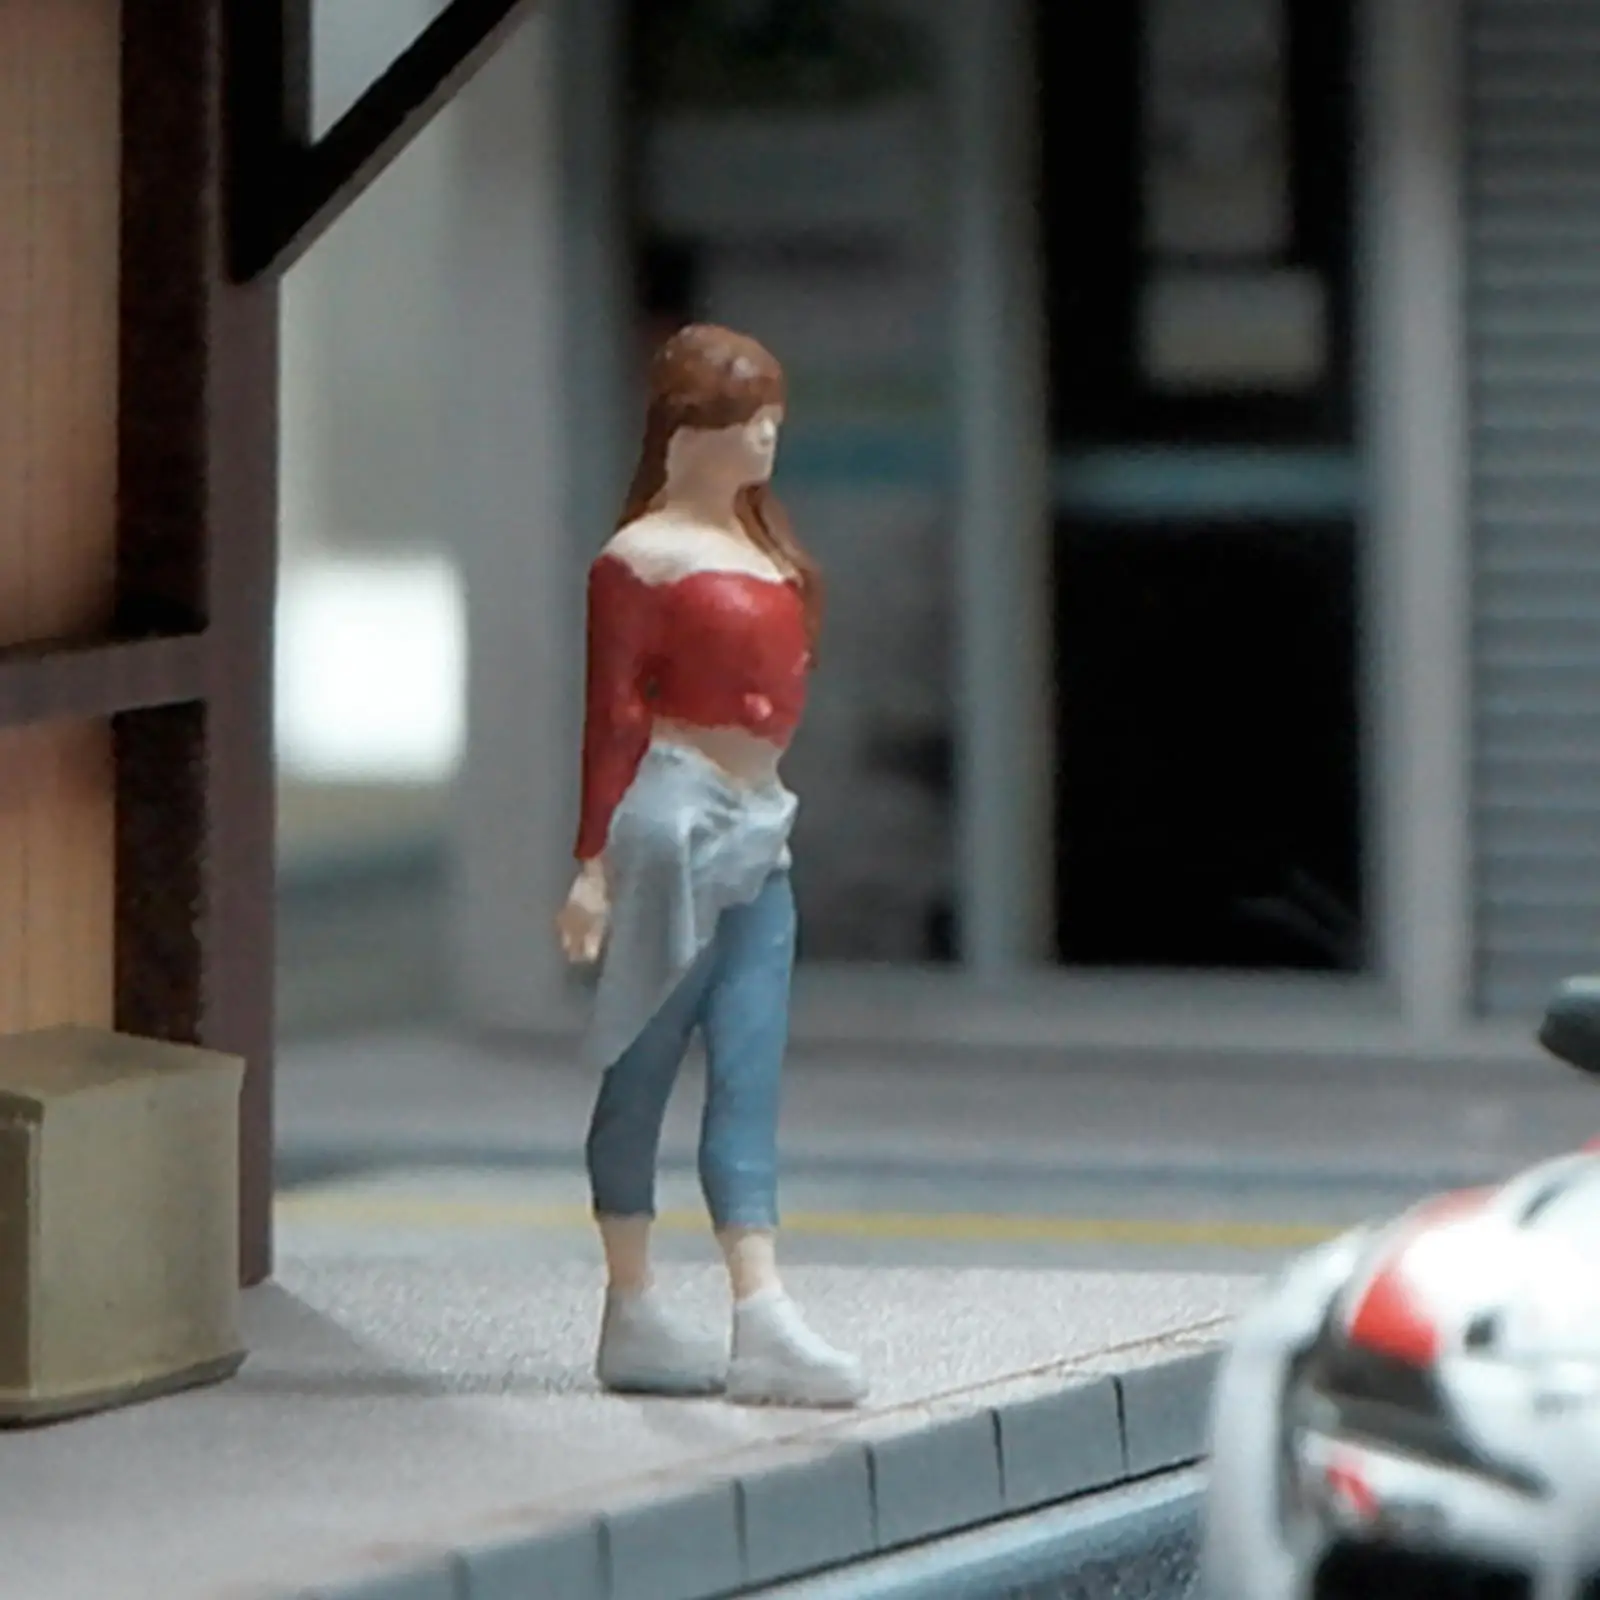 Miniature Scene People Role Play Figure Simulation Miniature toy Figurines for Miniature Scene Diorama Model Train Layout